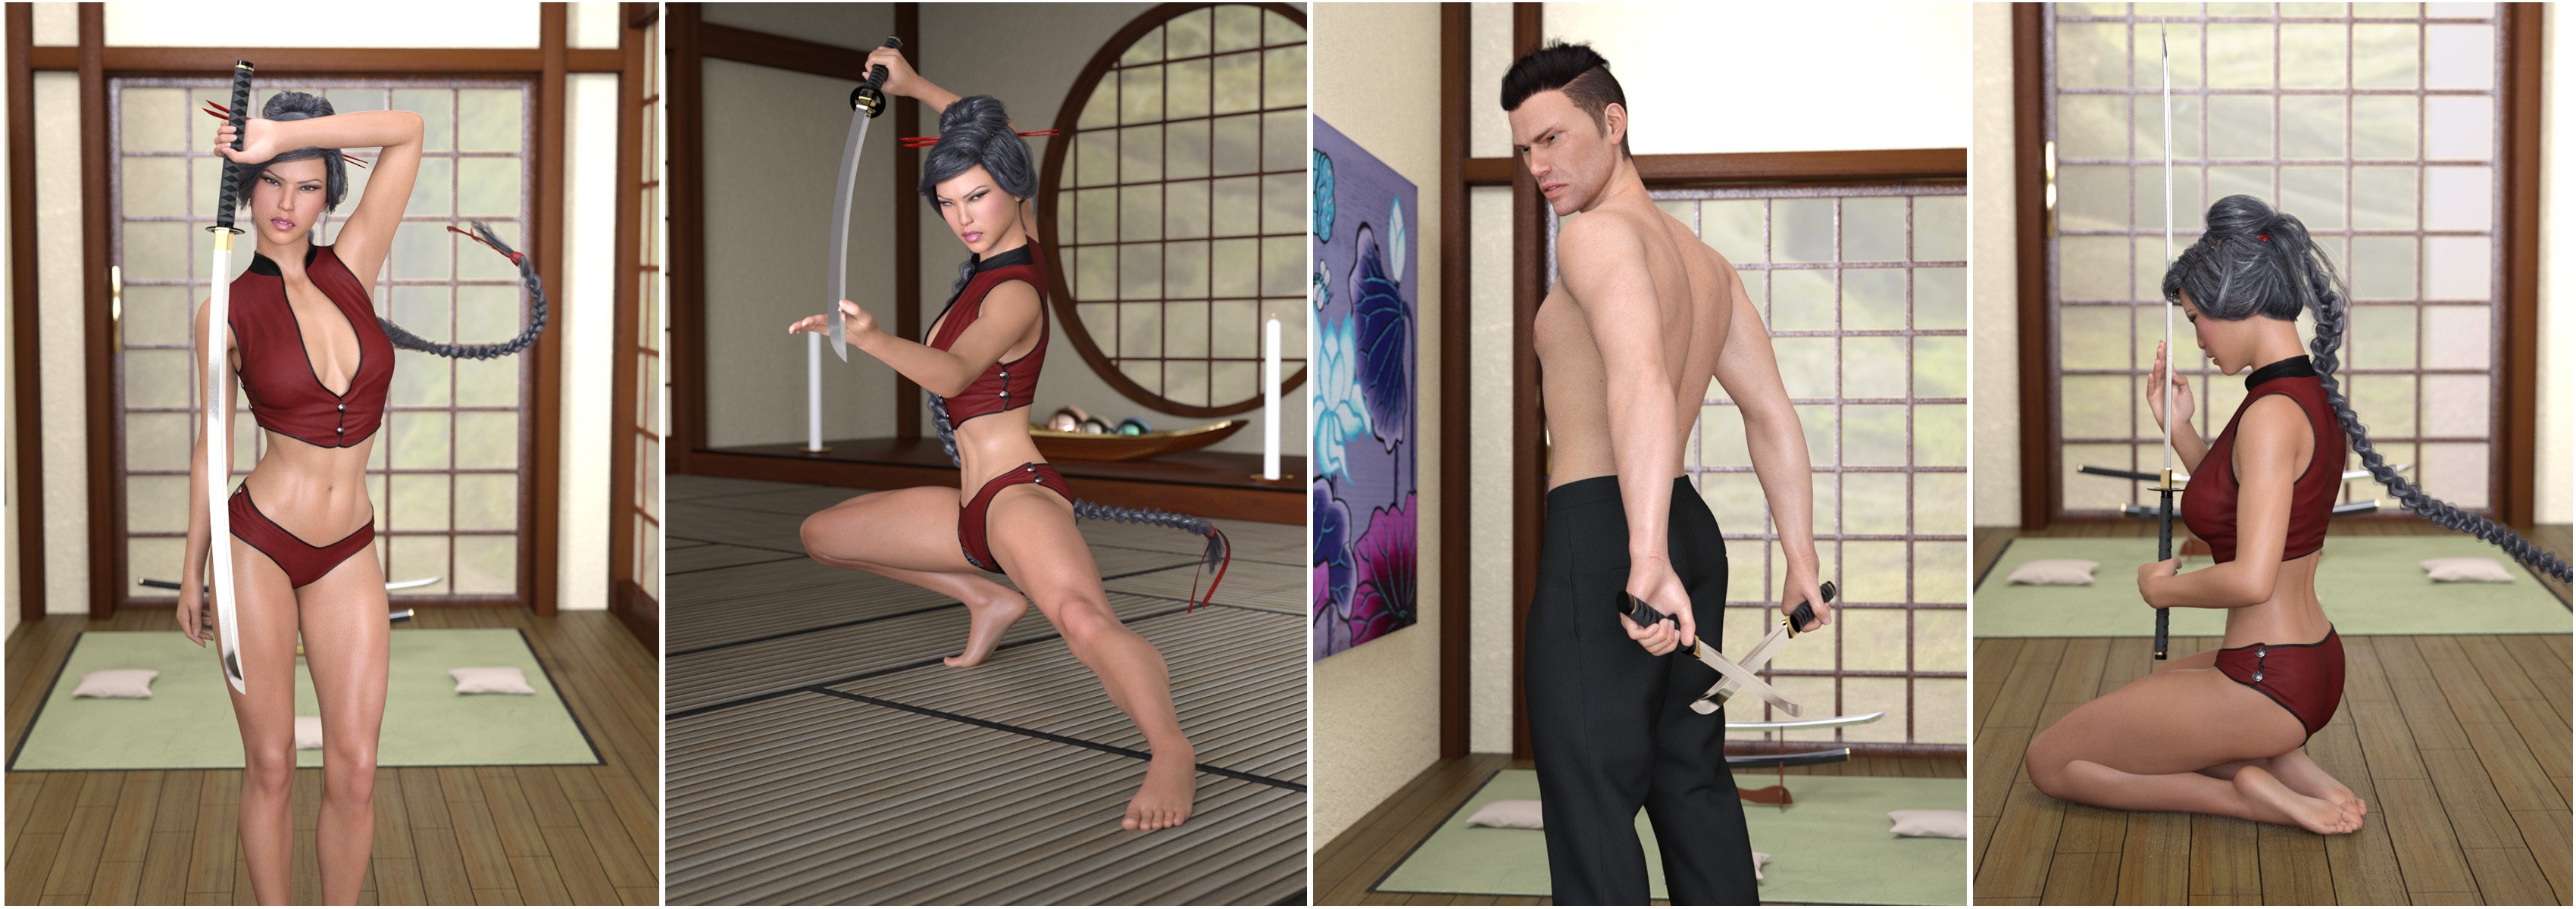 Z Samurai Swords - Props and Poses for Genesis 8 by: Zeddicuss, 3D Models by Daz 3D